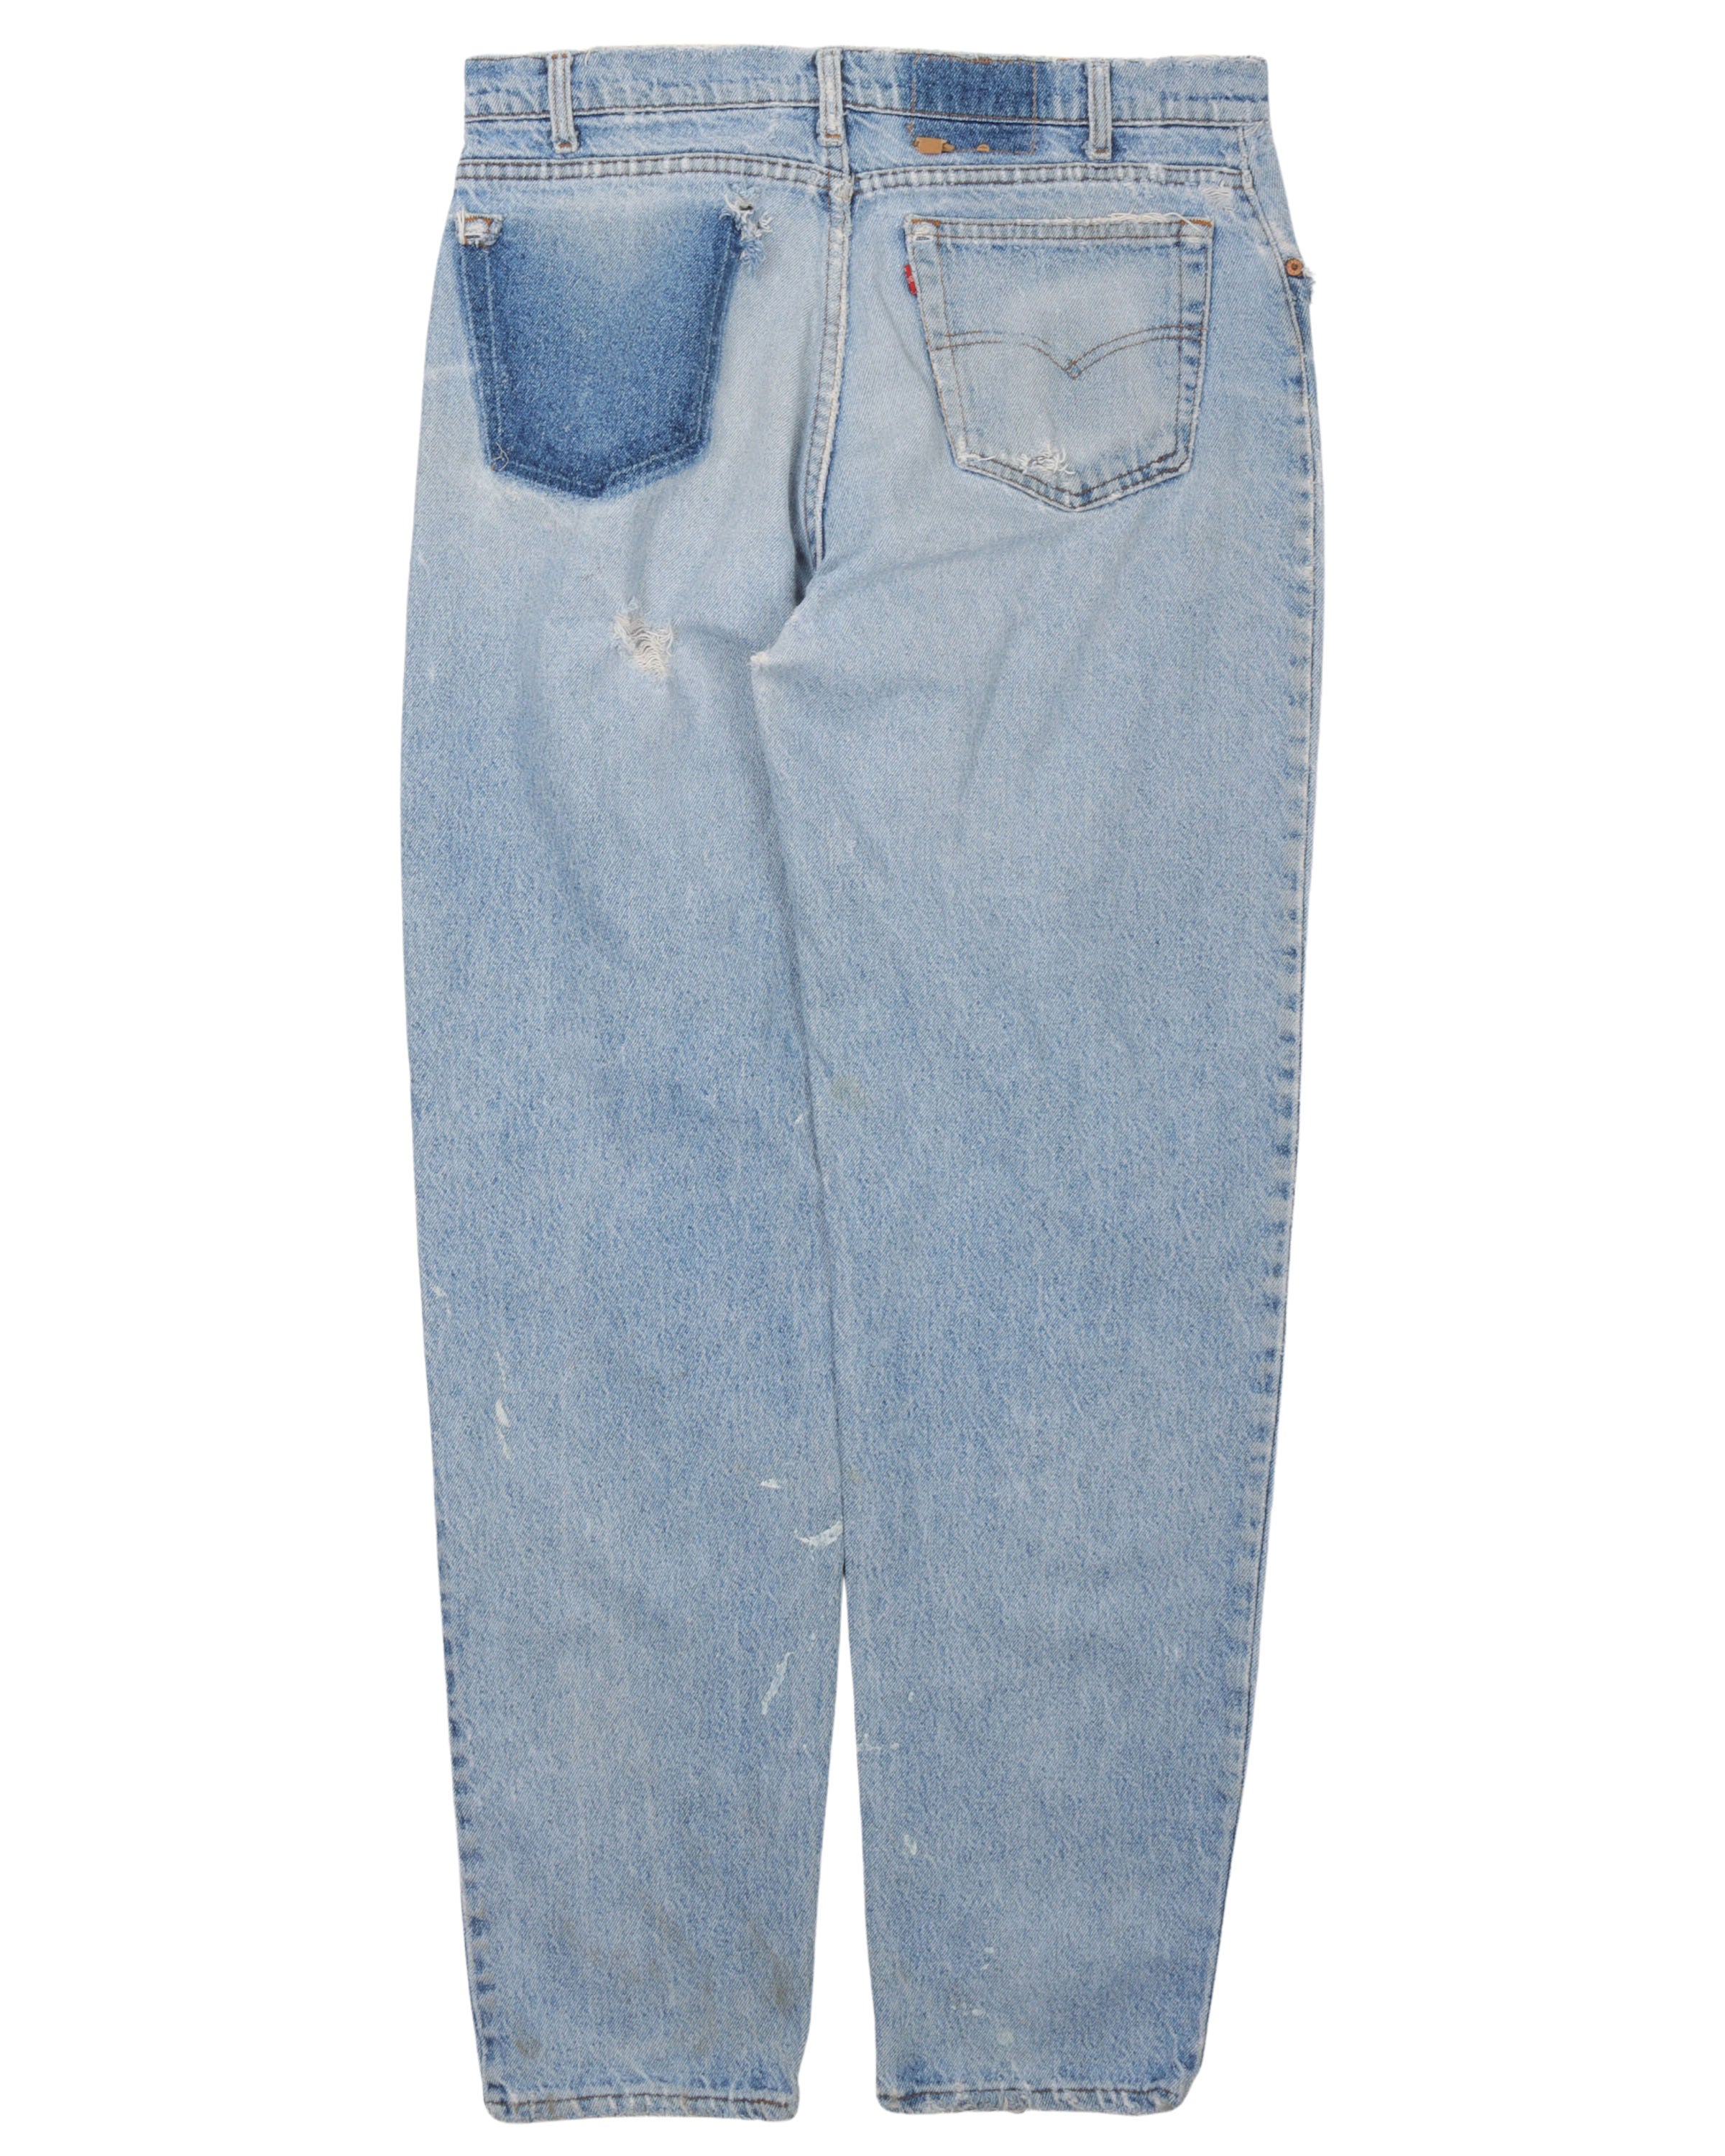 Distressed Levi's Jeans